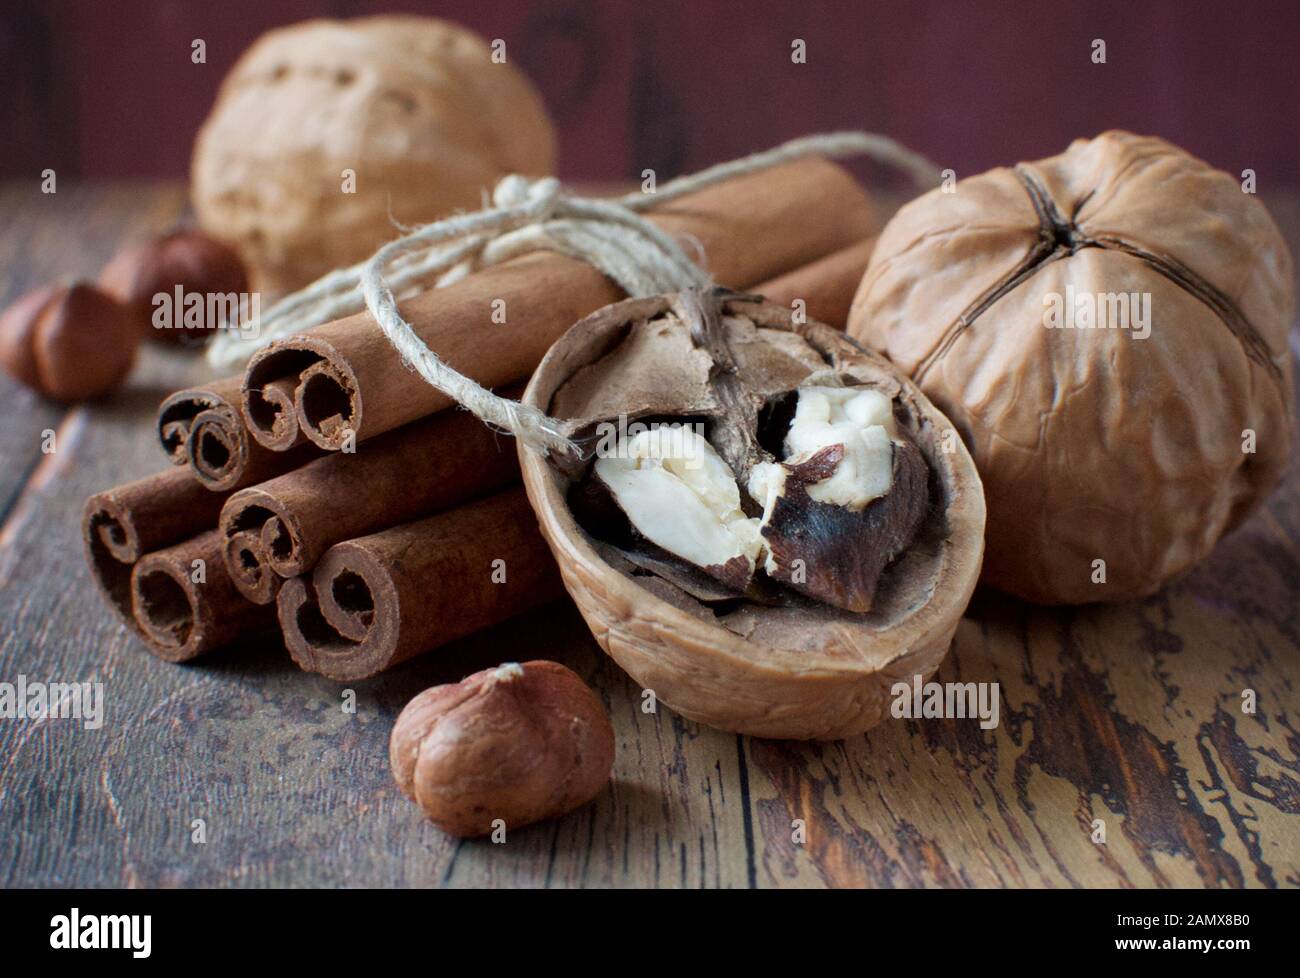 Cinnamon sticks tied with rope, walnuts and hazelnuts Stock Photo